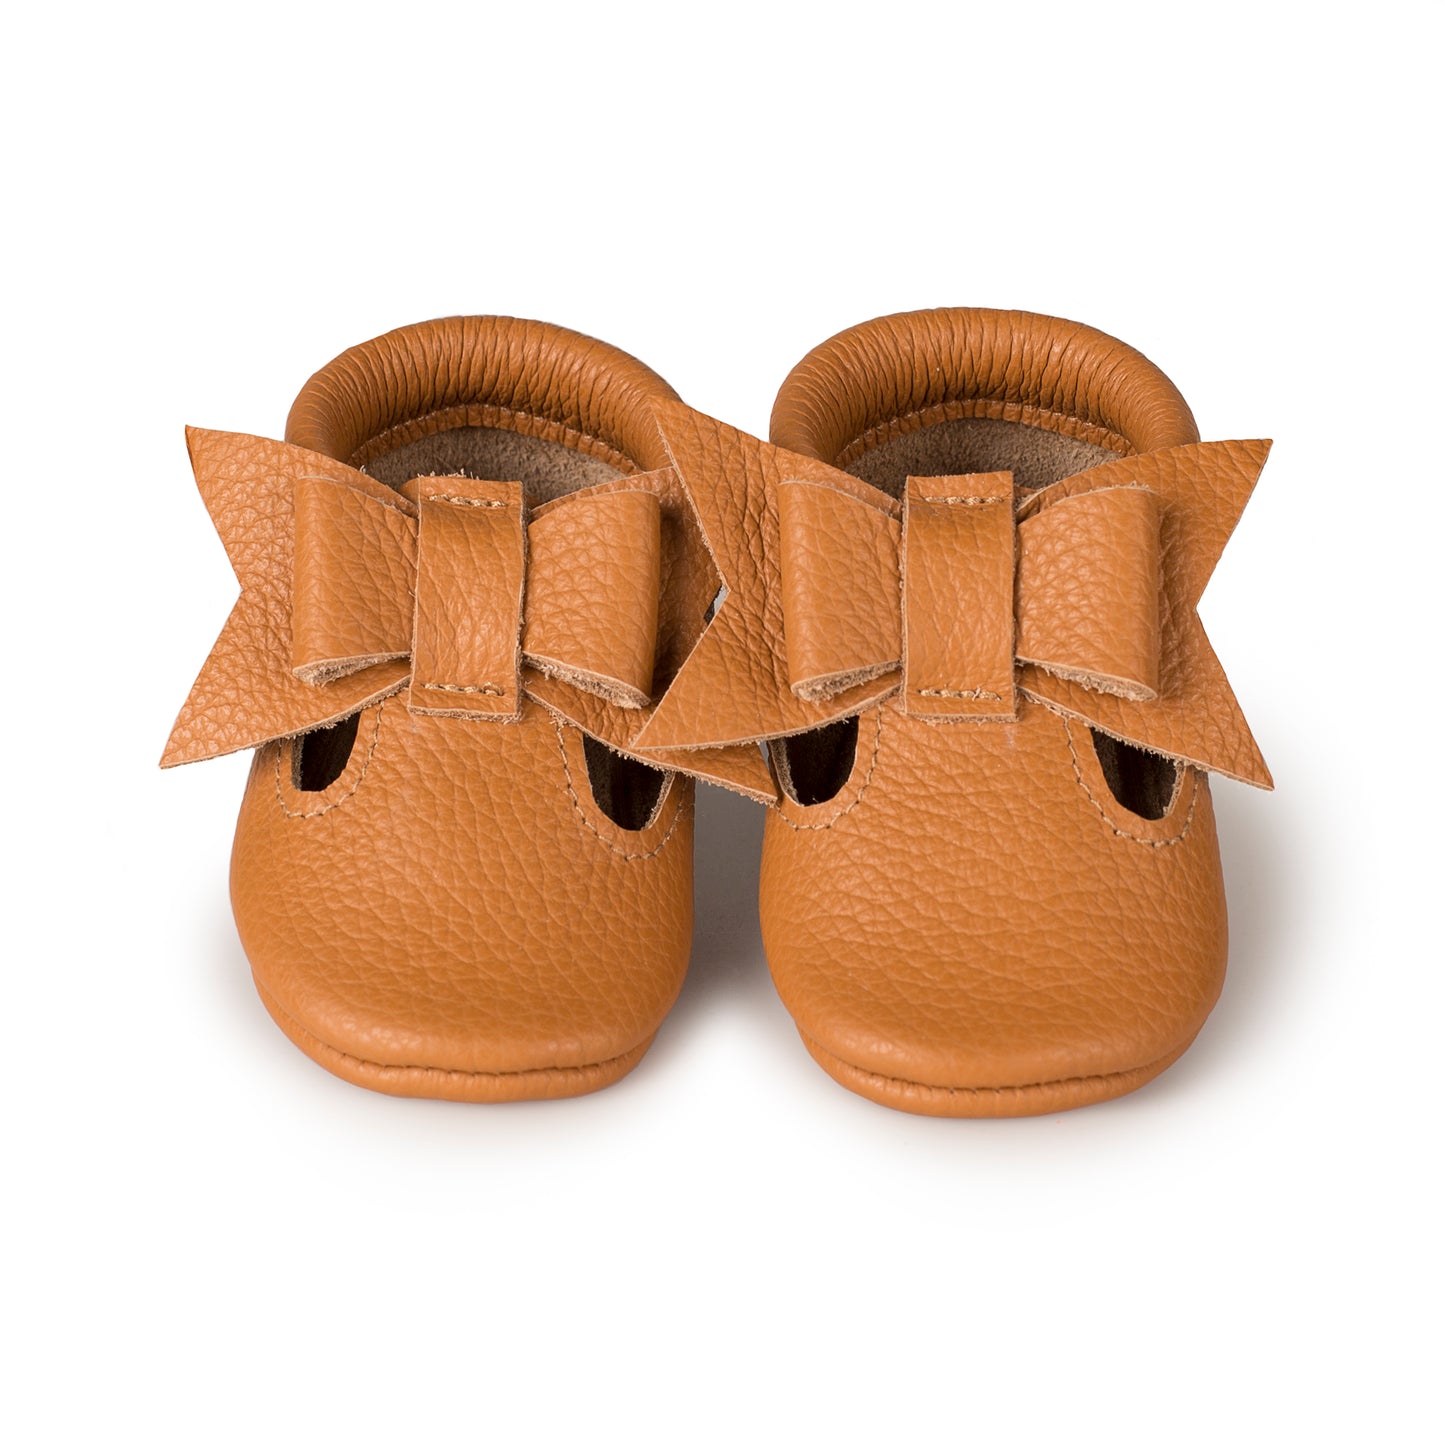 Handmade baby shoes